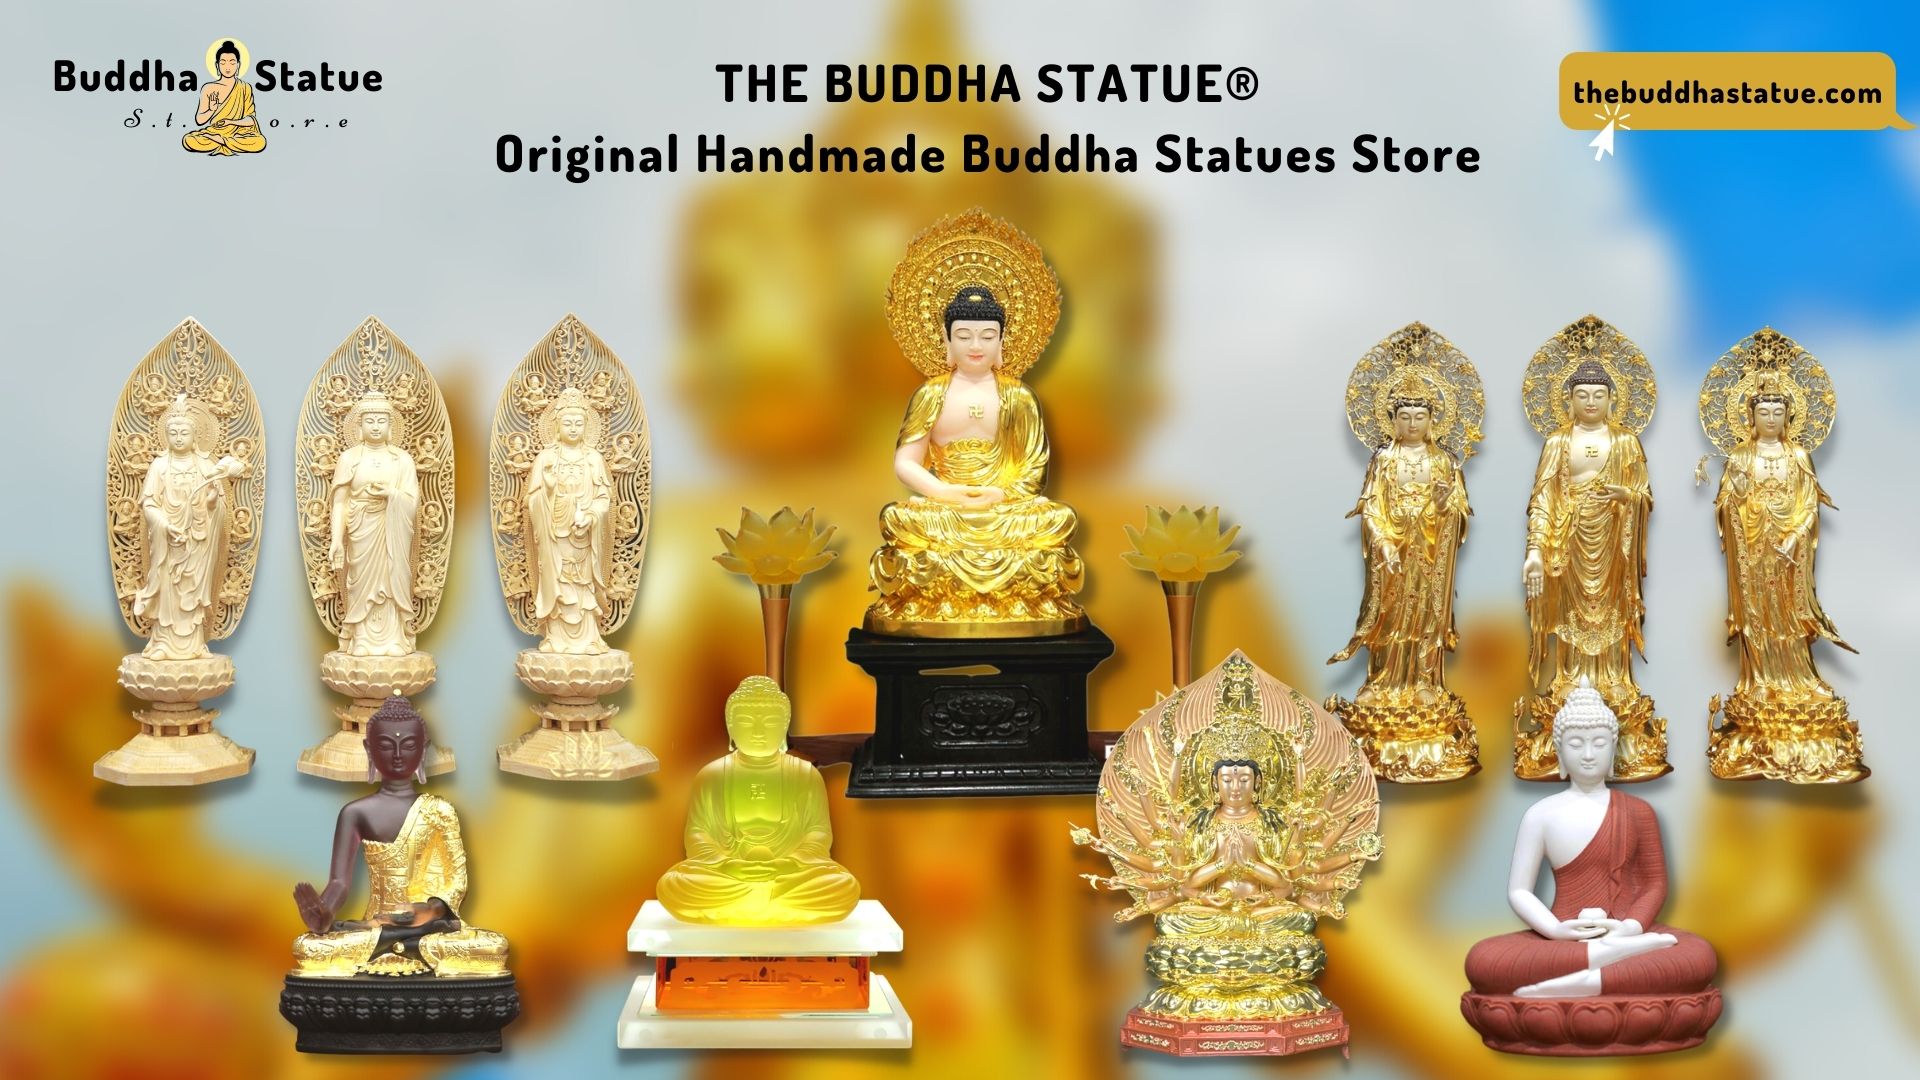 The Buddha Statue Store Web Banner - The Buddha Statue ®